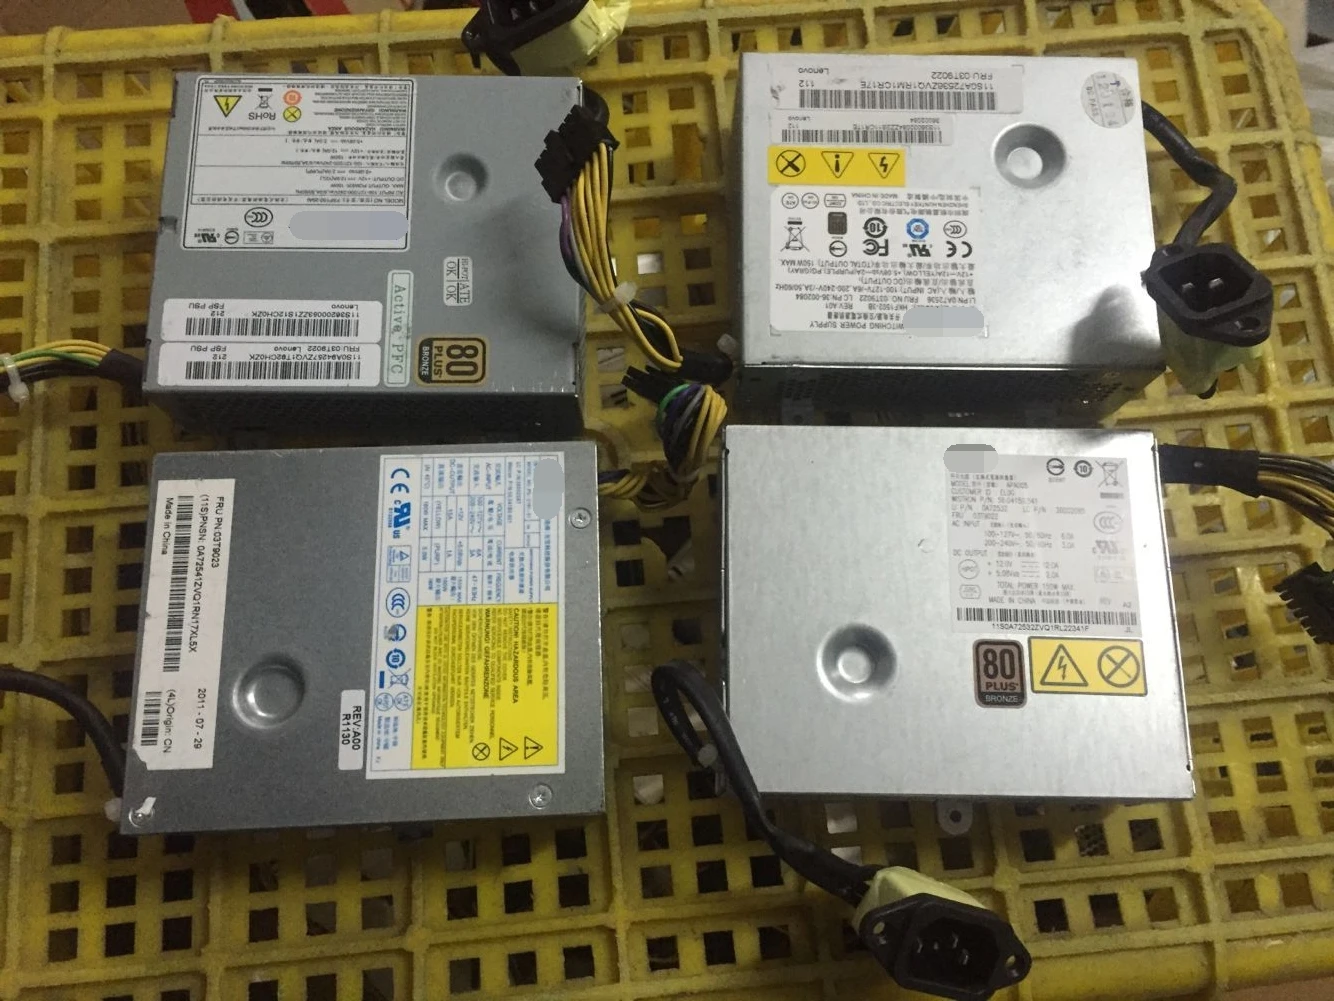 HKF1502-3B for Huntkey Desktop AIO Power Supply for Lenovo s500 S700 M7100Z AIO